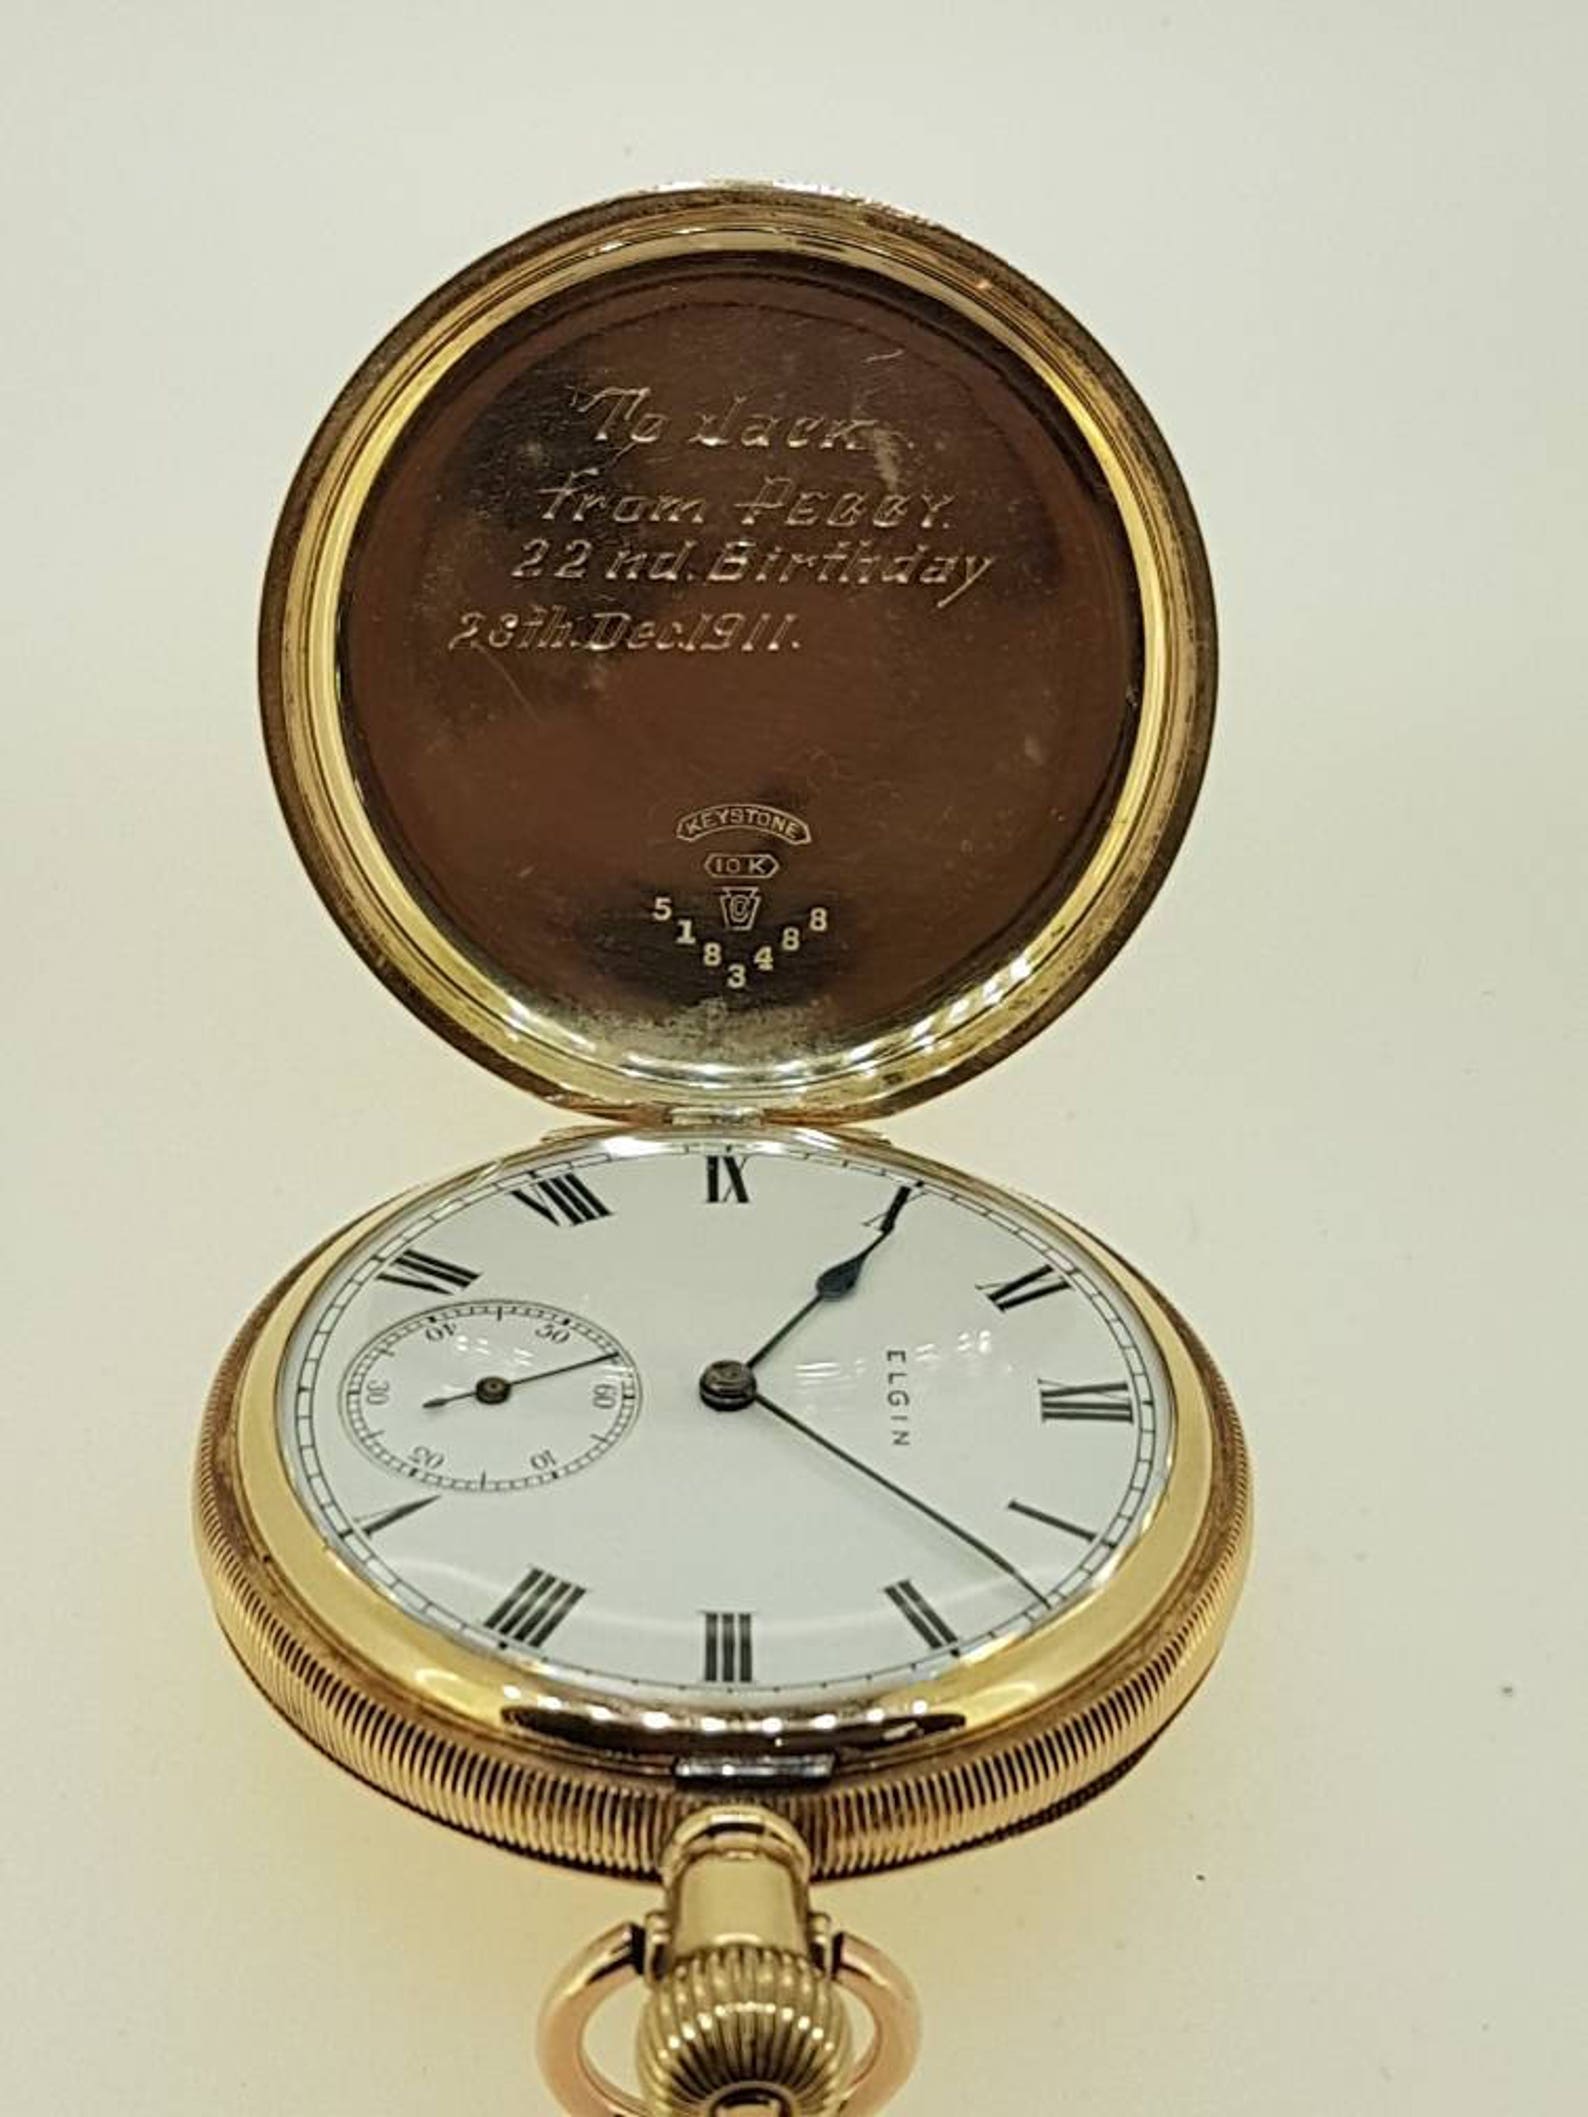 Elgin pocket watch c.1910 with 10k gold case. Fully restored | Etsy